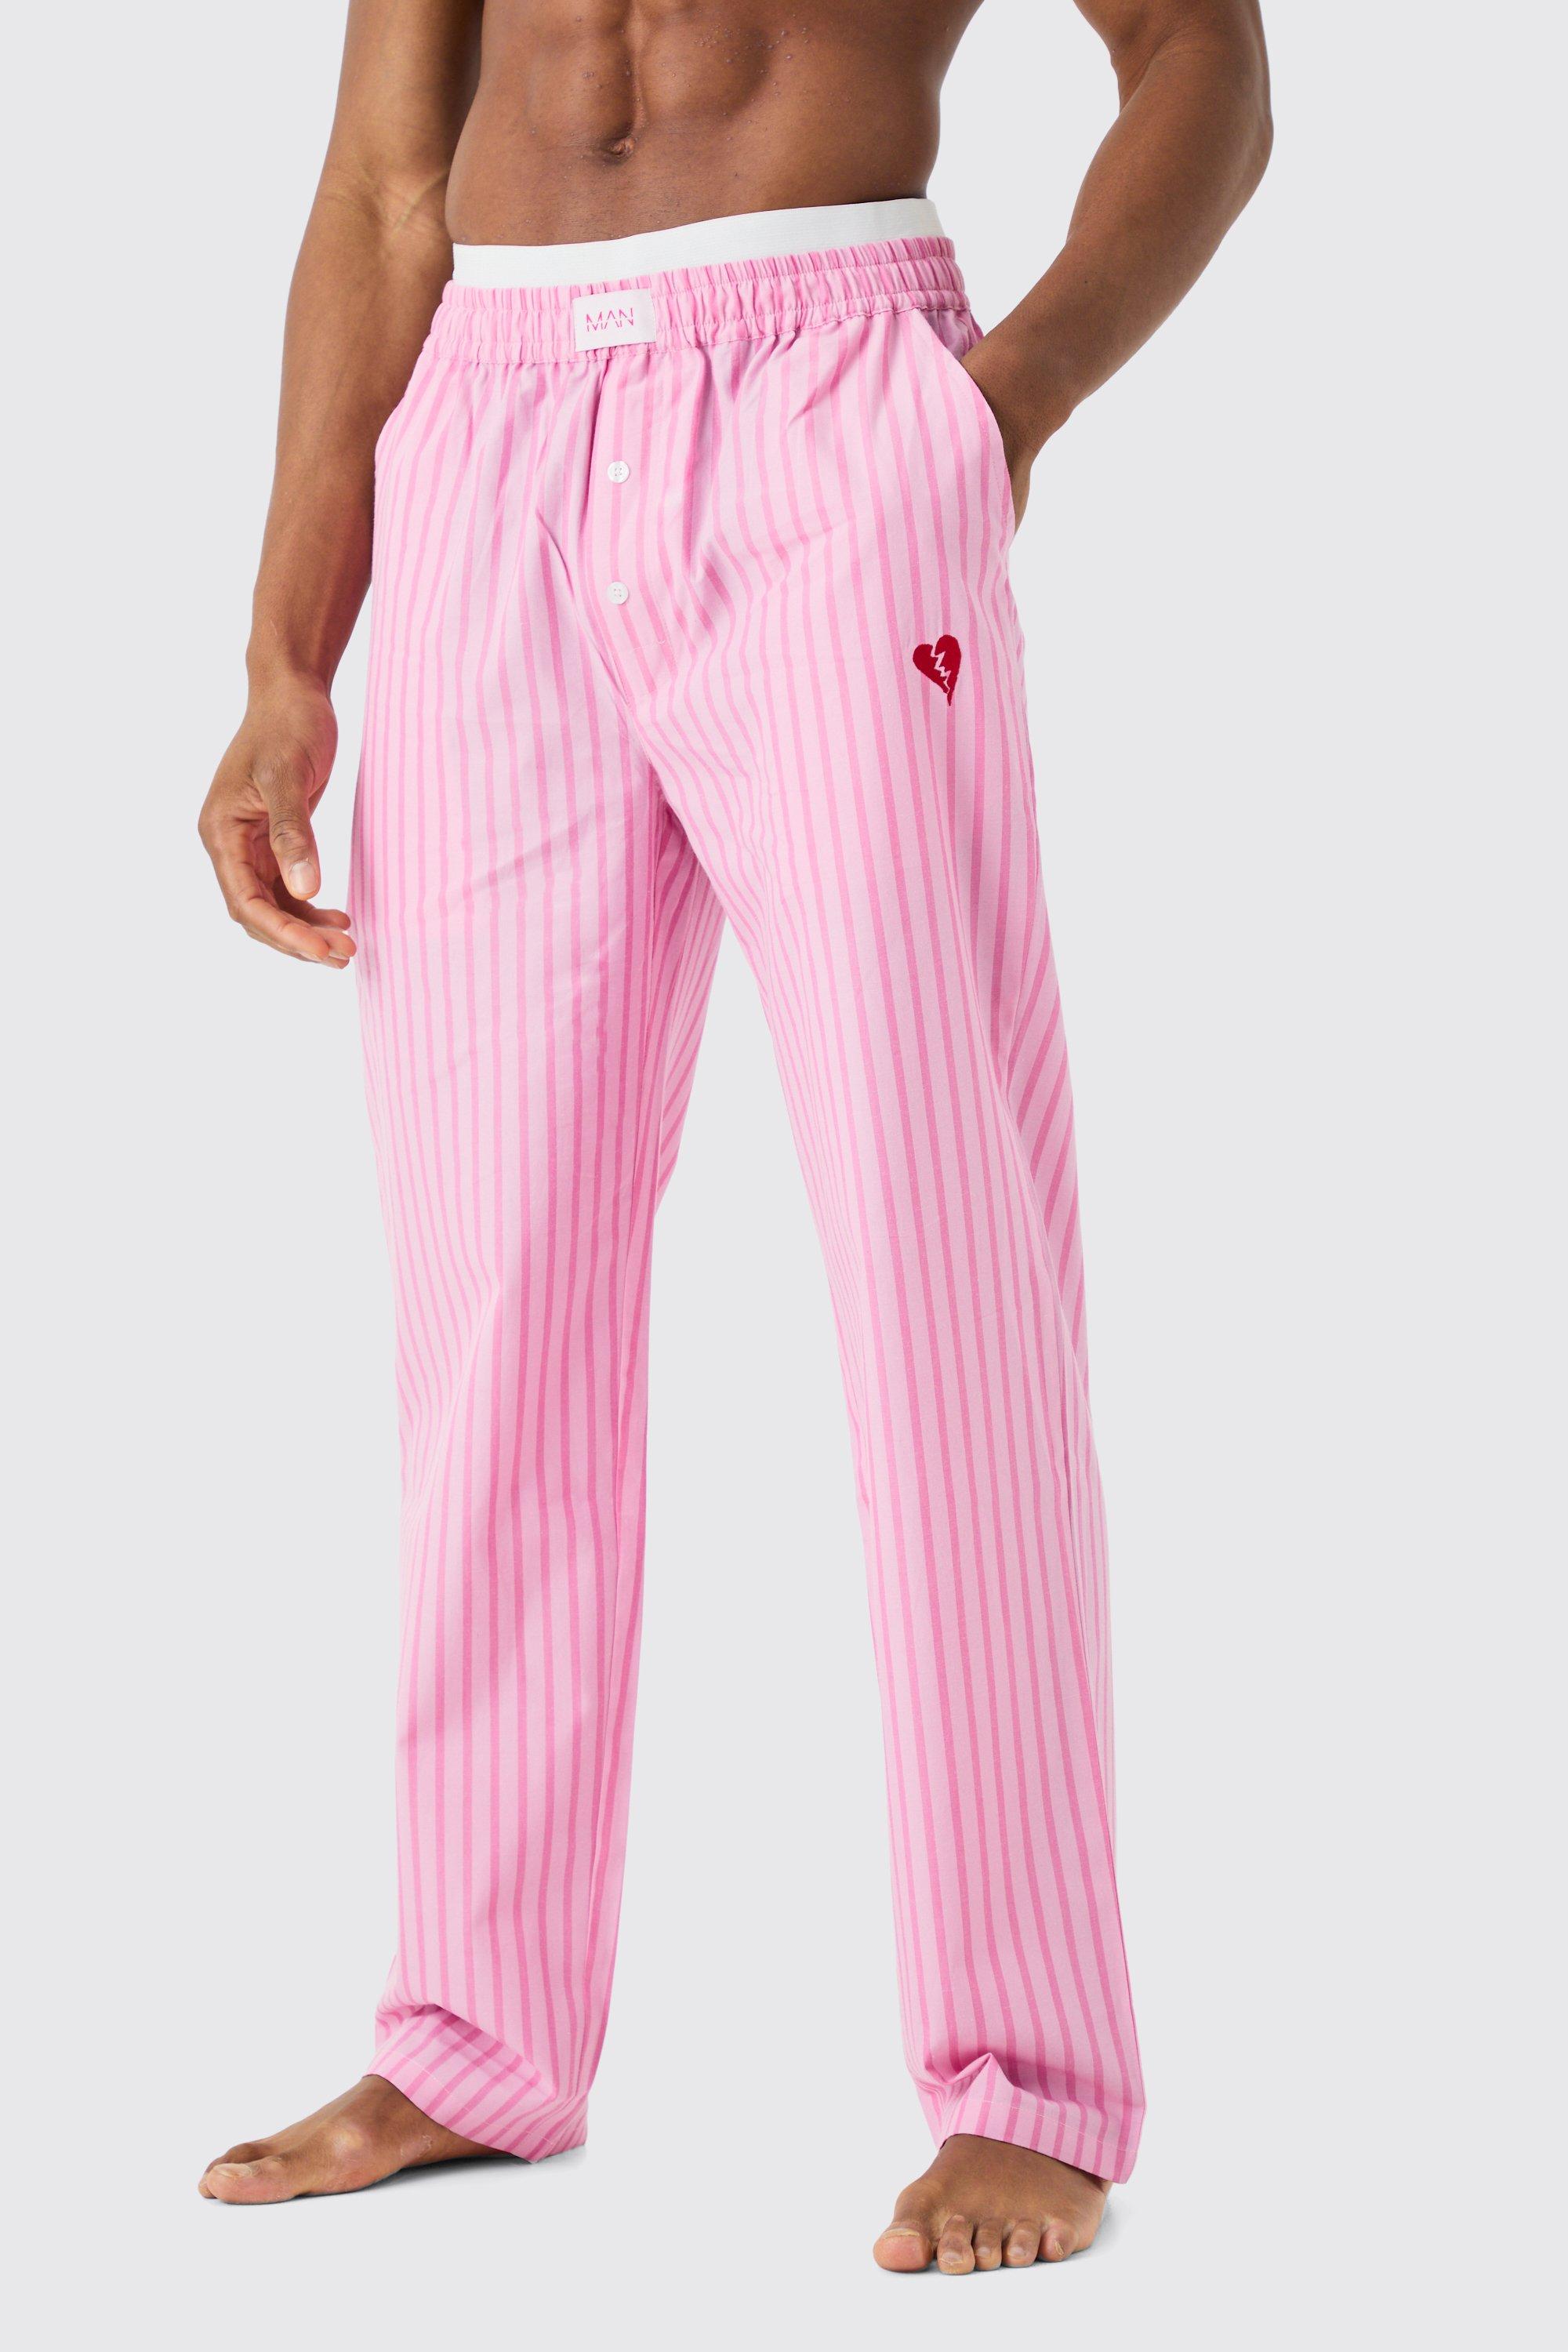 Love to Lounge pink striped sleepwear, Men's Fashion, Bottoms, Sleep and  Loungewear on Carousell